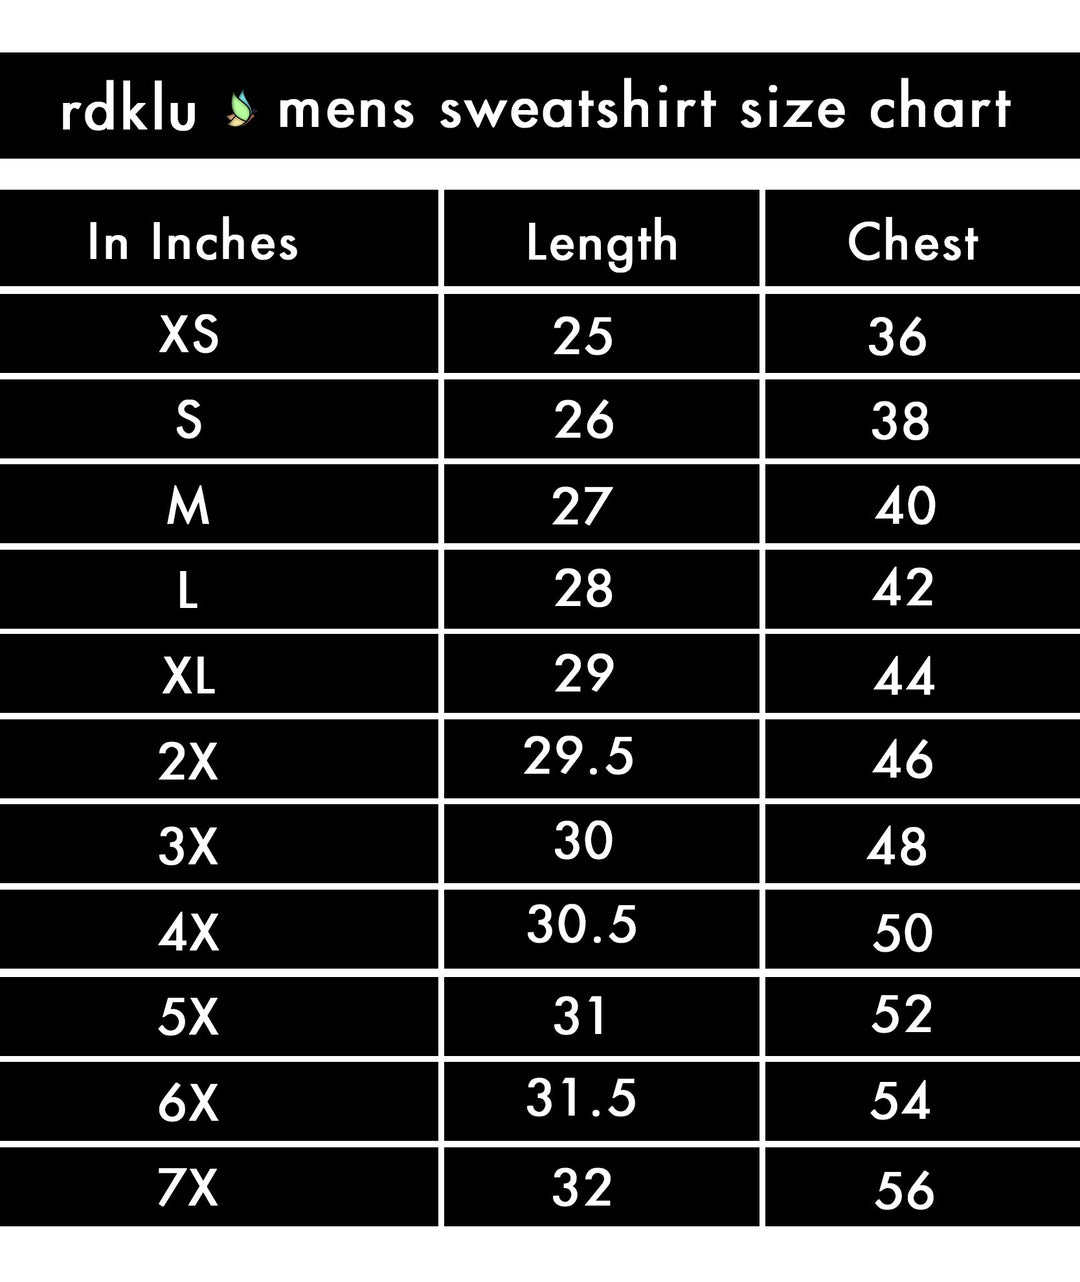 RDKLU MENS SWEATSHIRT - RDKL - Men's Sweatshirt#82